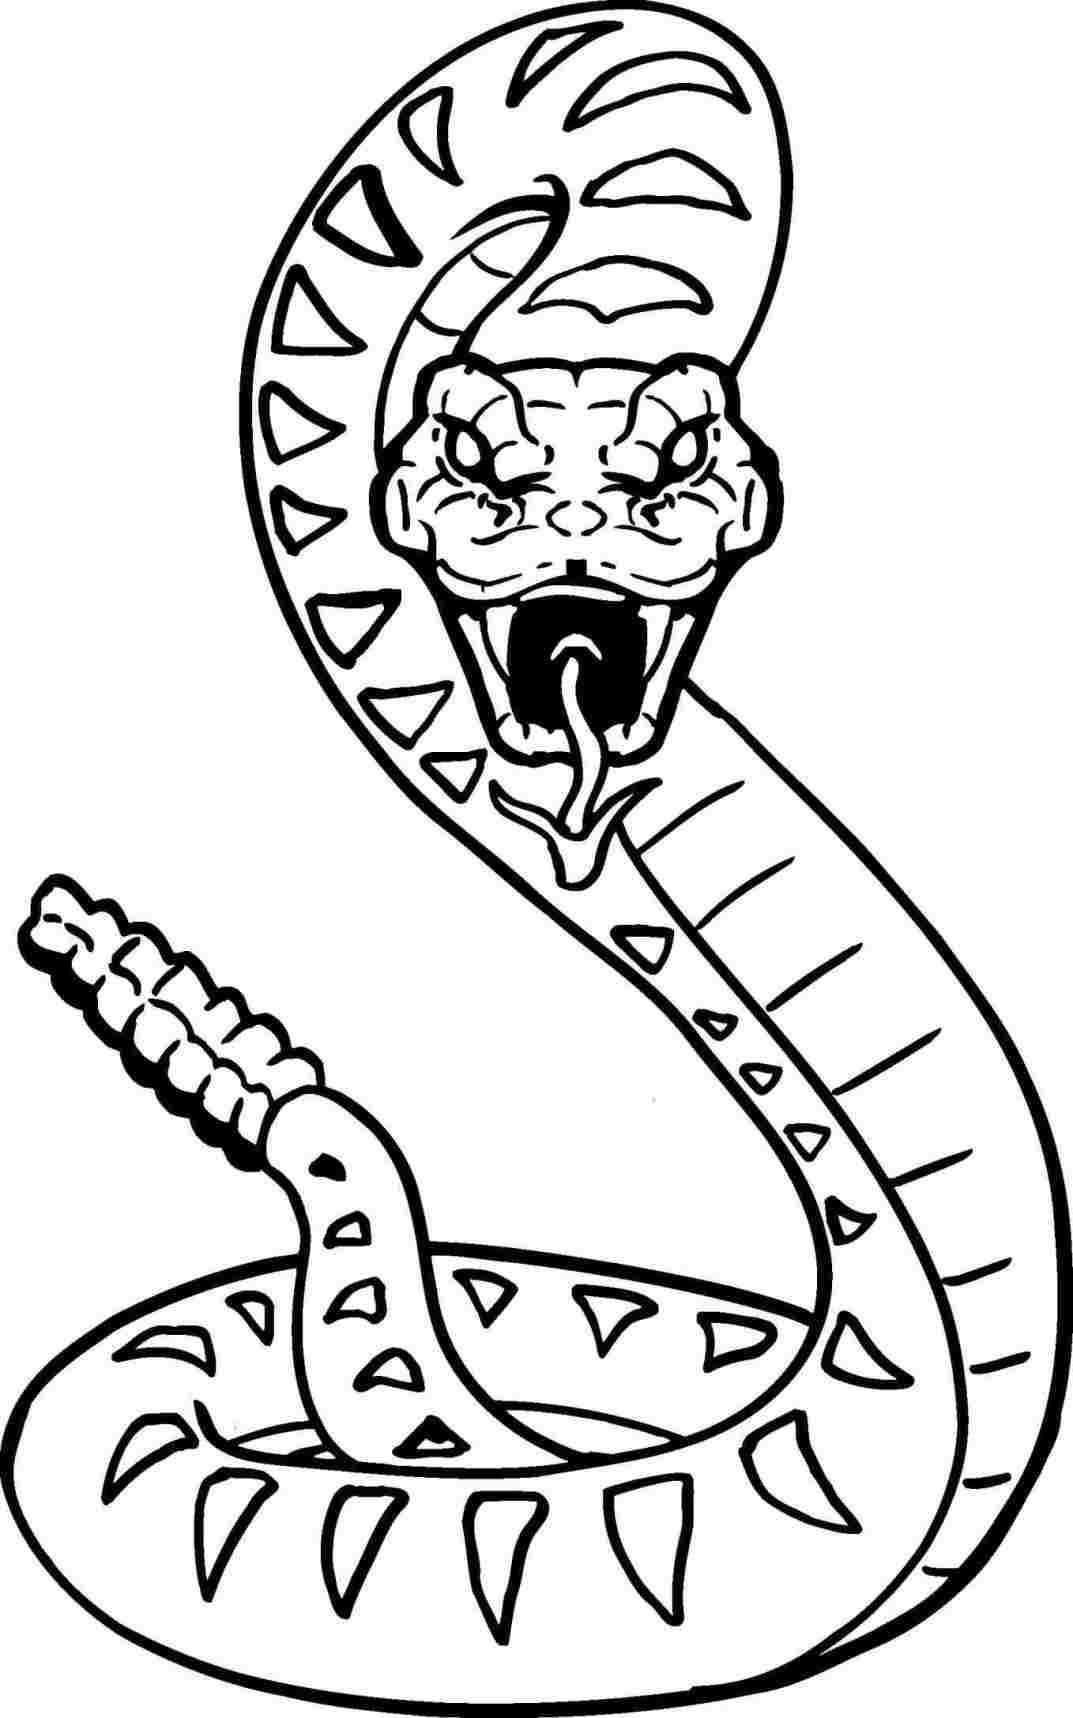 Google Image Result for https://paintingvalley.com/drawings/cobra-snake-head-drawing-35.jpg  in 2020 | Snake coloring pages, Snake drawing, Coloring pages